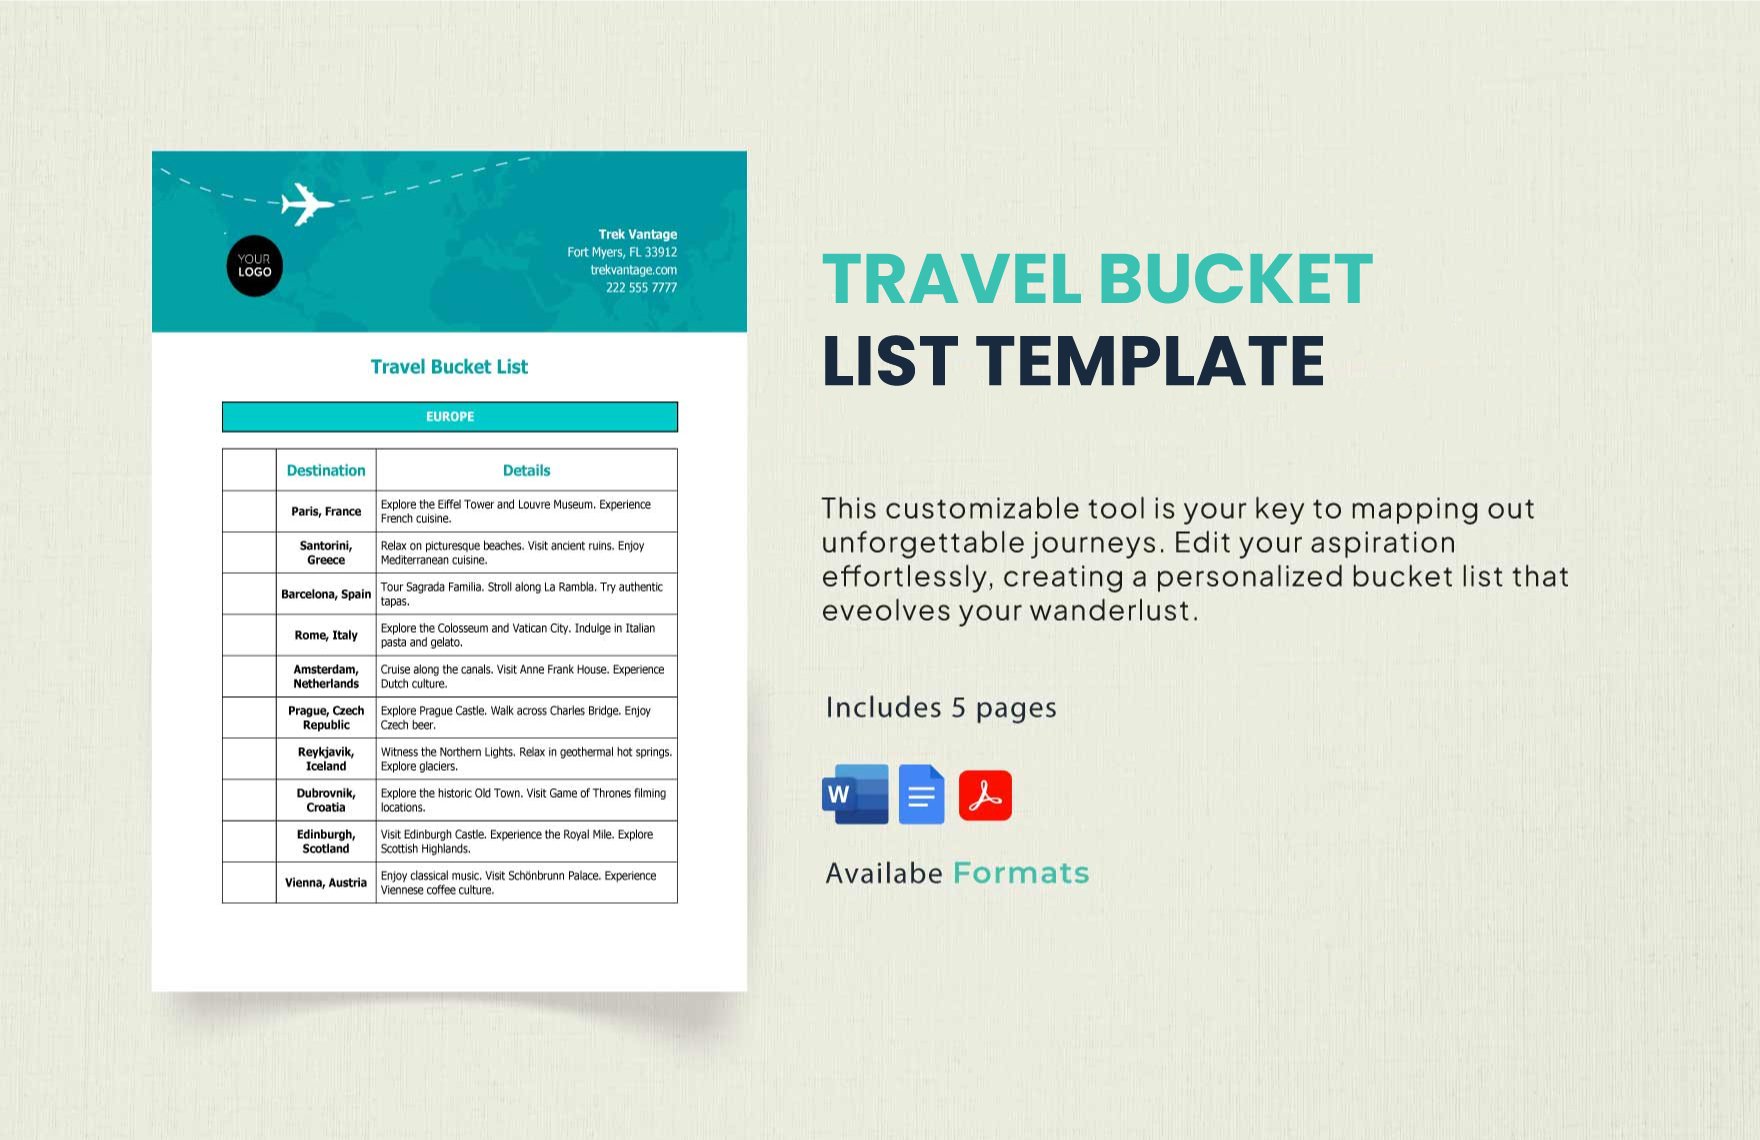 Free Travel Bucket List Template in Word, Google Docs, PDF